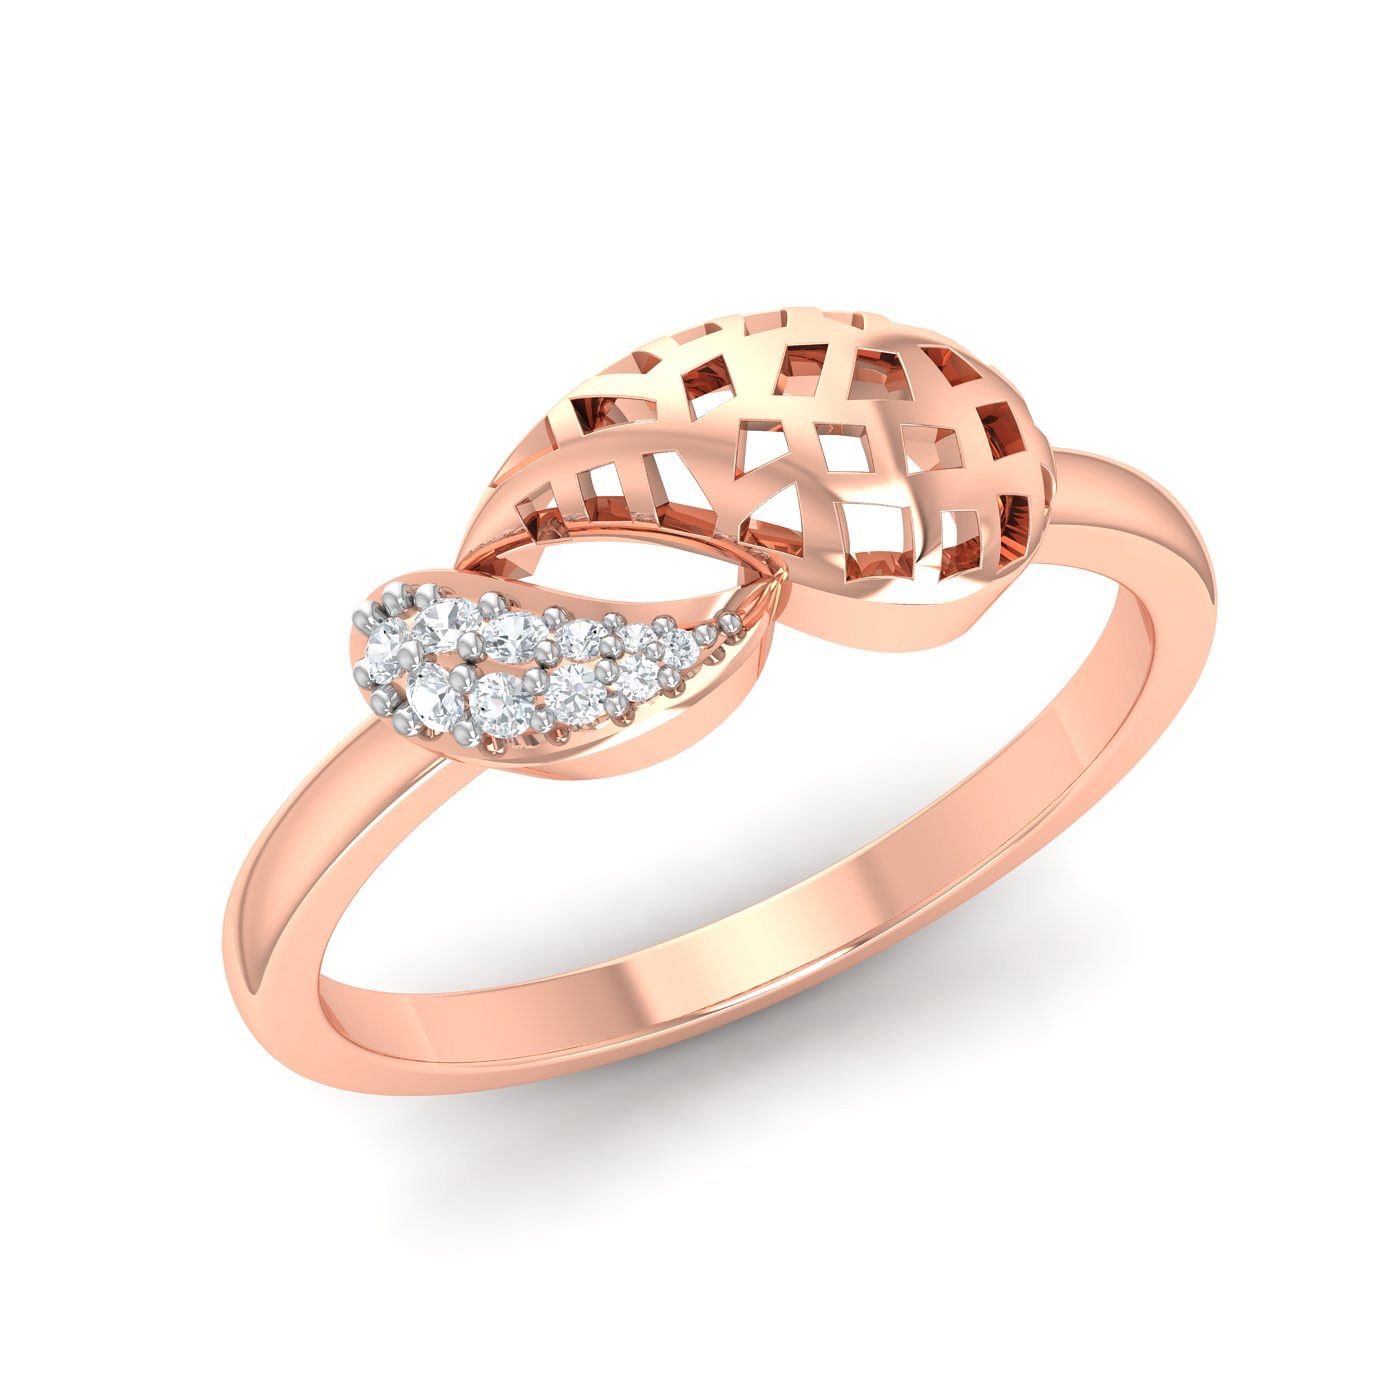 Aadhya Diamond Ring For Women | Modern Style Design Diamond Ring For Women In Rose Gold